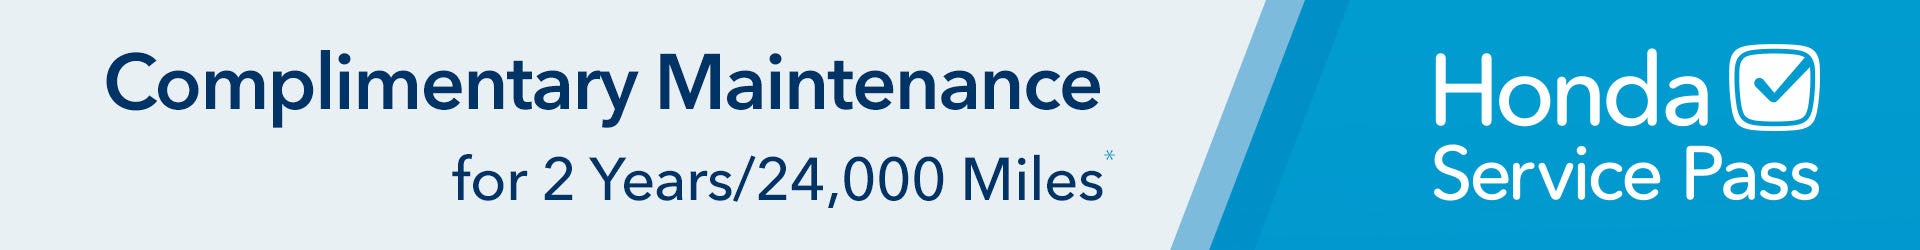 Complimentary Maintenance for 2 years / 24,000 Miles Honda Service Pass | John Hinderer Honda in Heath OH